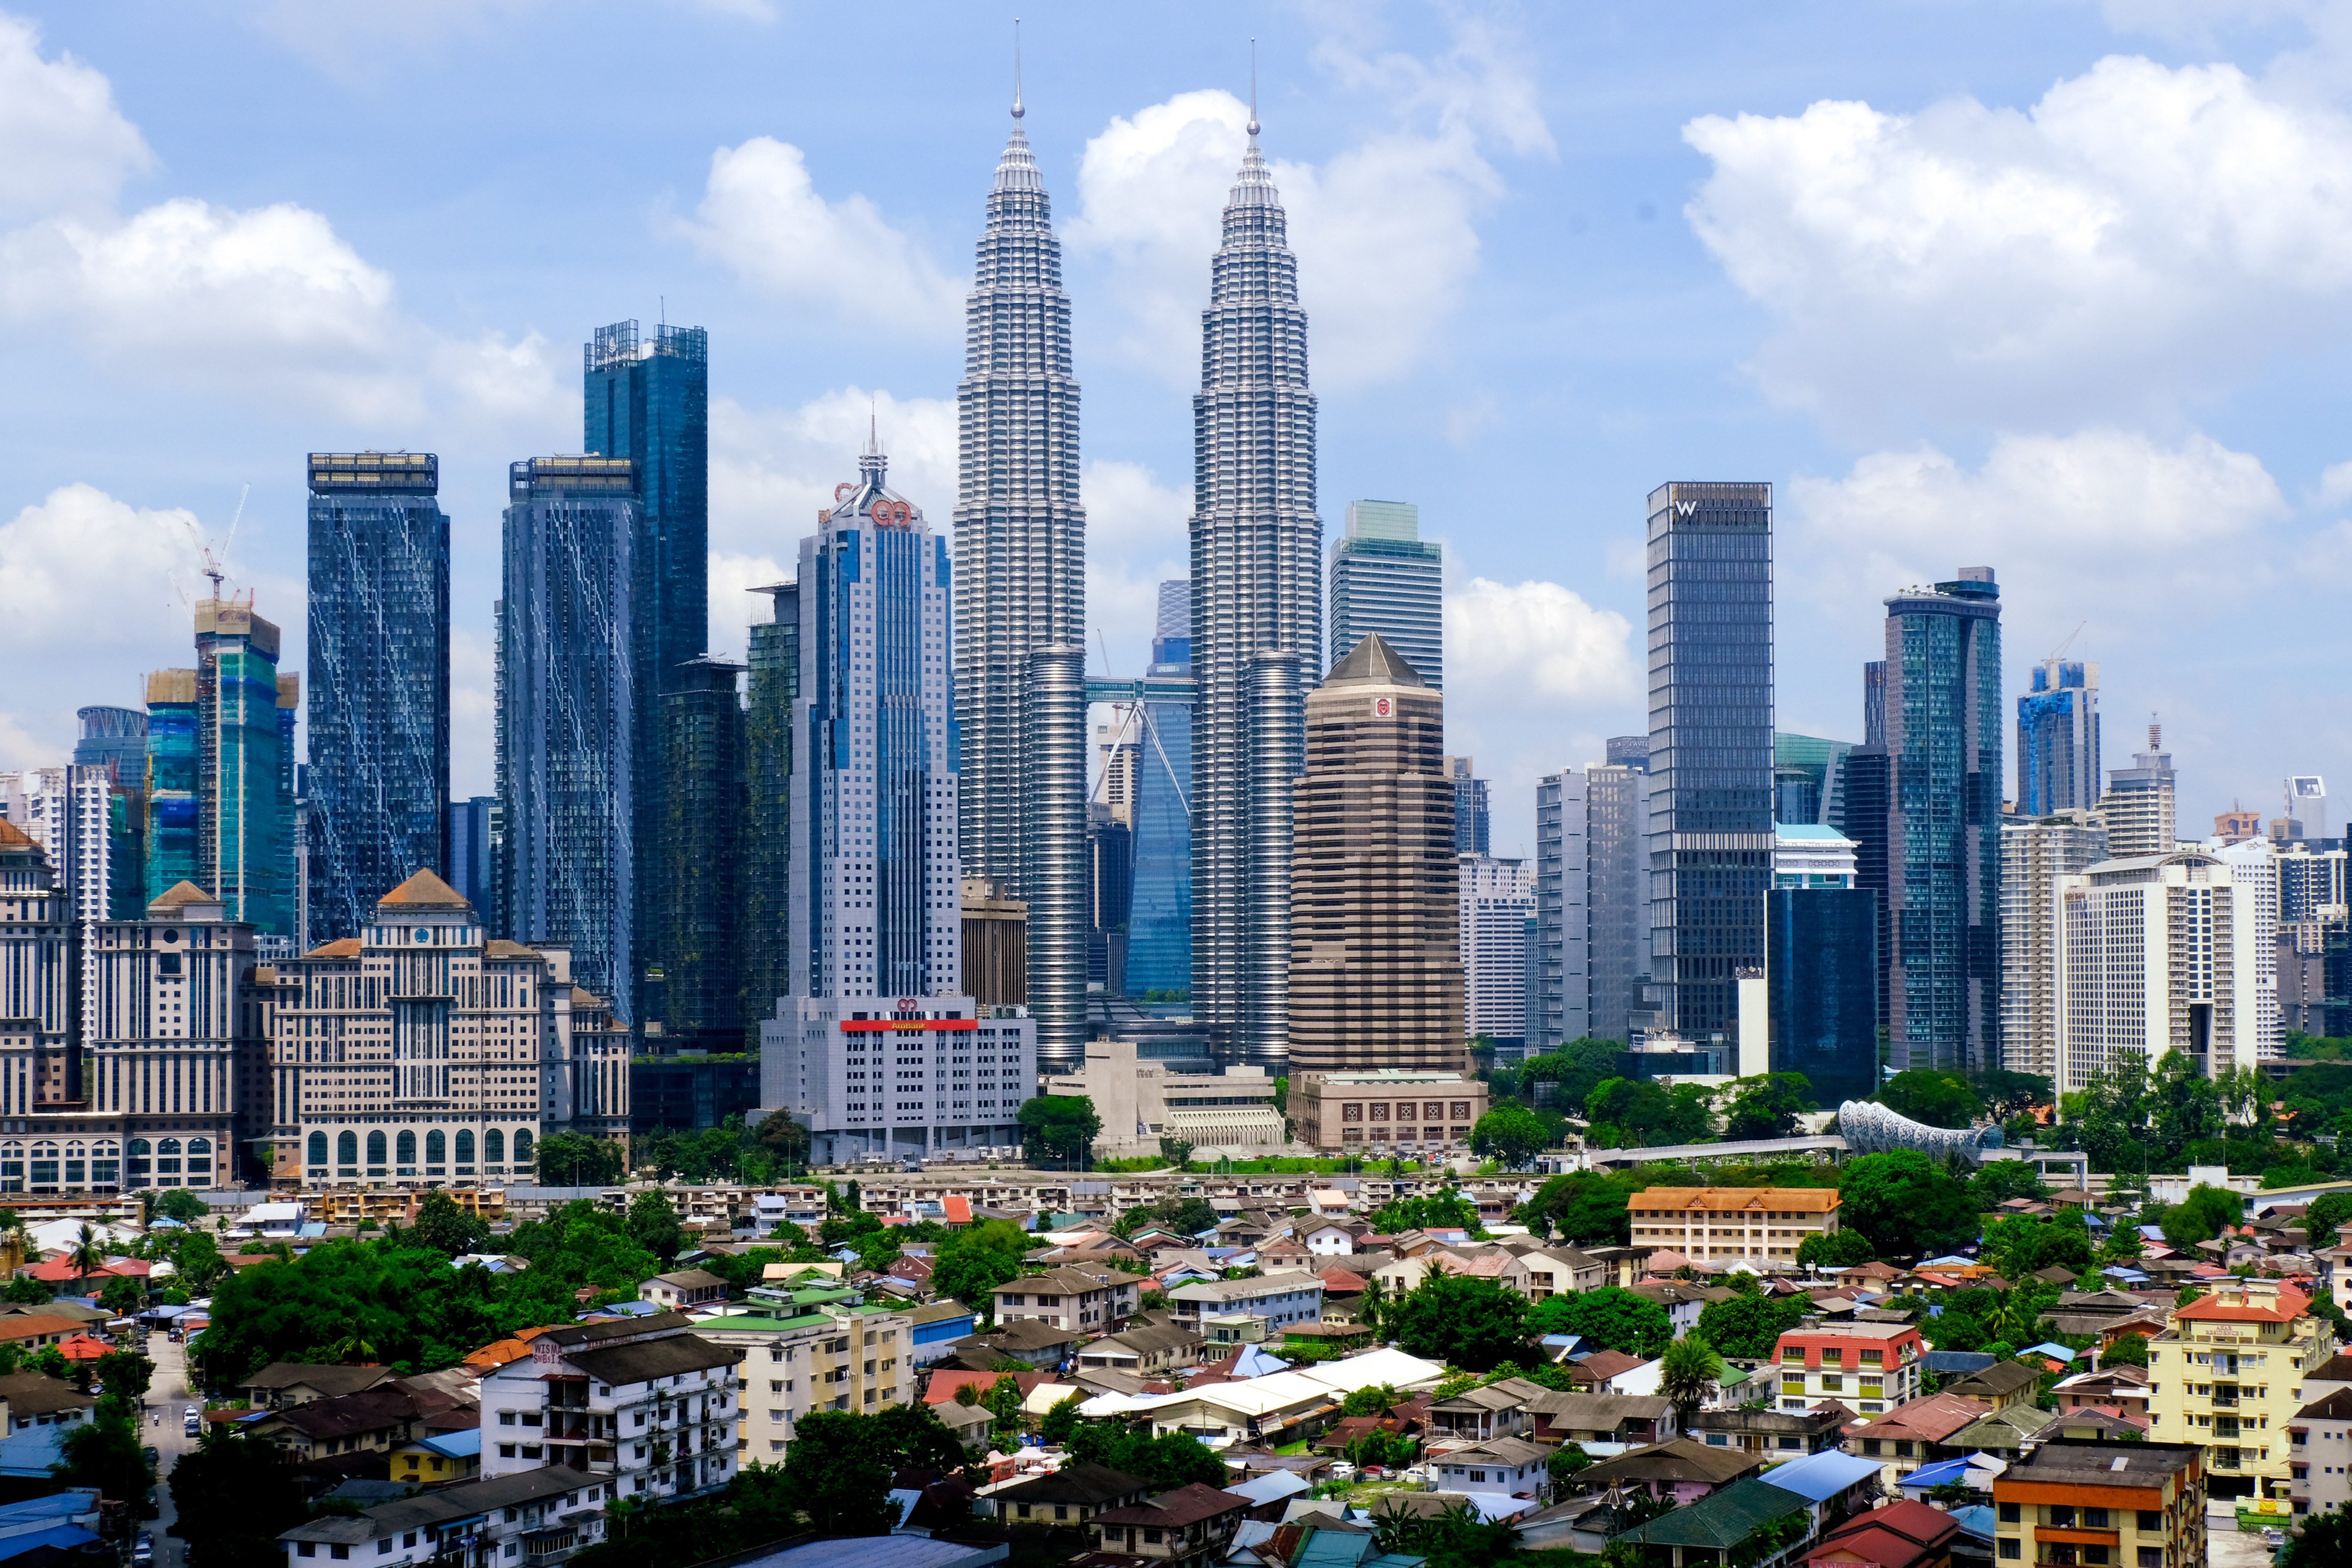 The skyline of Kuala Lumpur. Economy Minister Rafizi Ramli said last May that the Malaysian government plans to make the capital a regional hub for start-up companies. Photo: Bloomberg